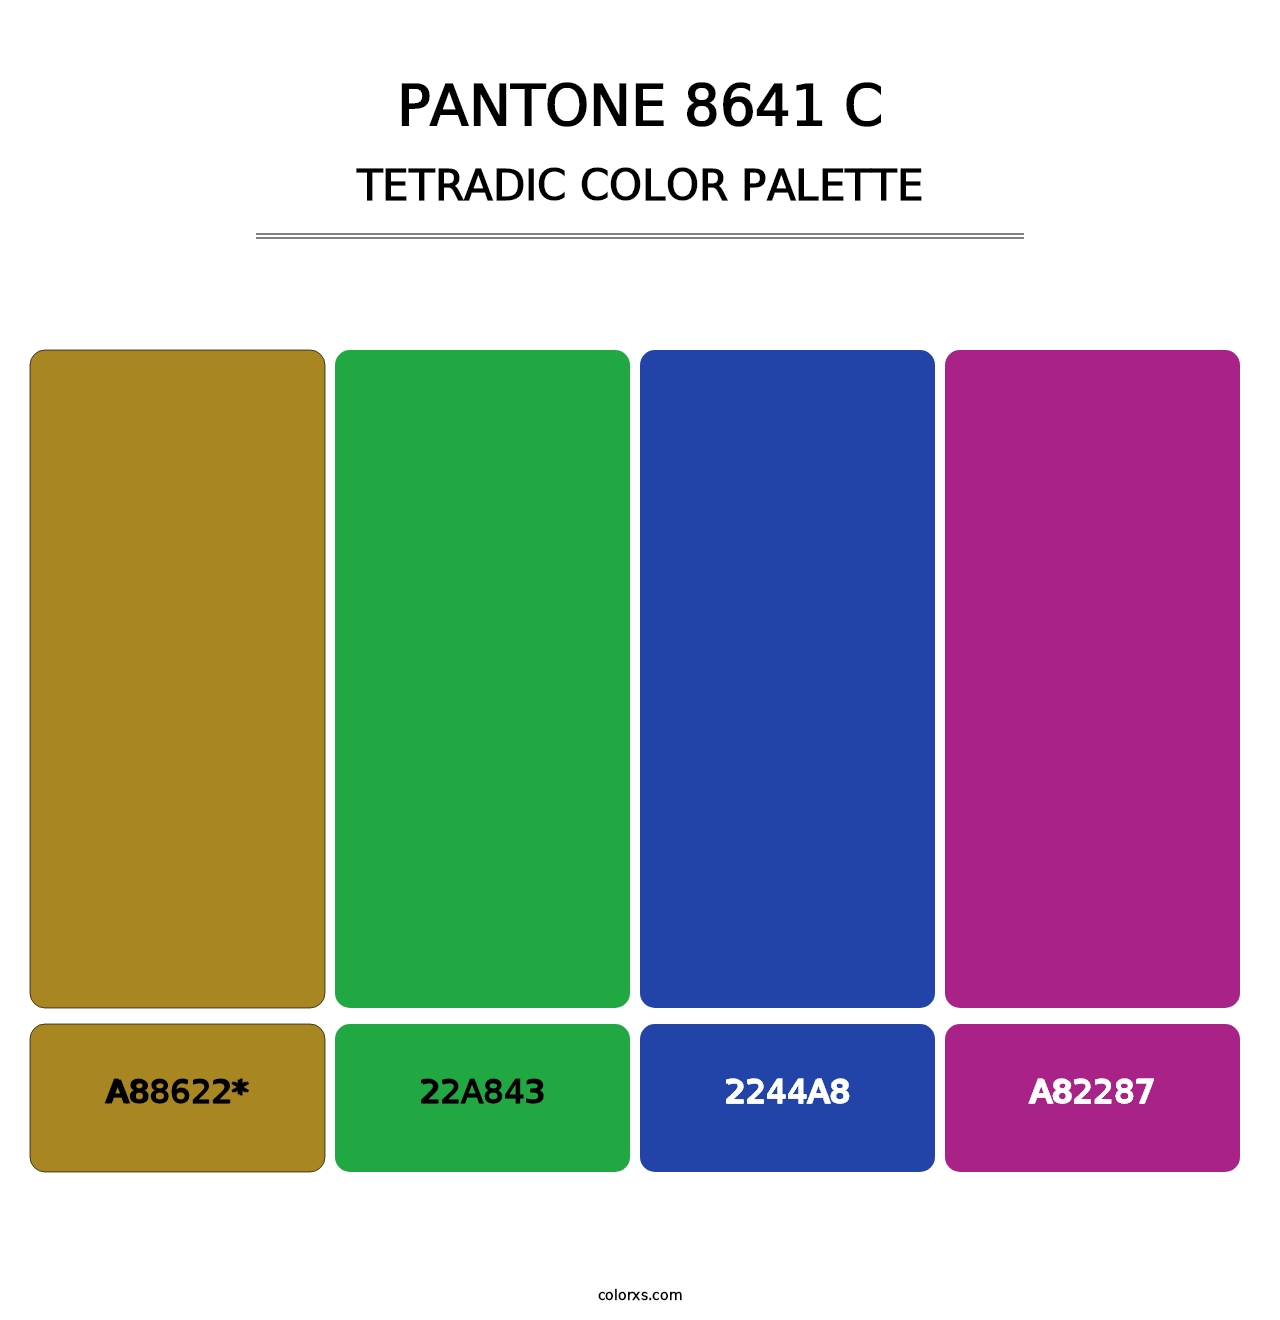 PANTONE 8641 C - Tetradic Color Palette